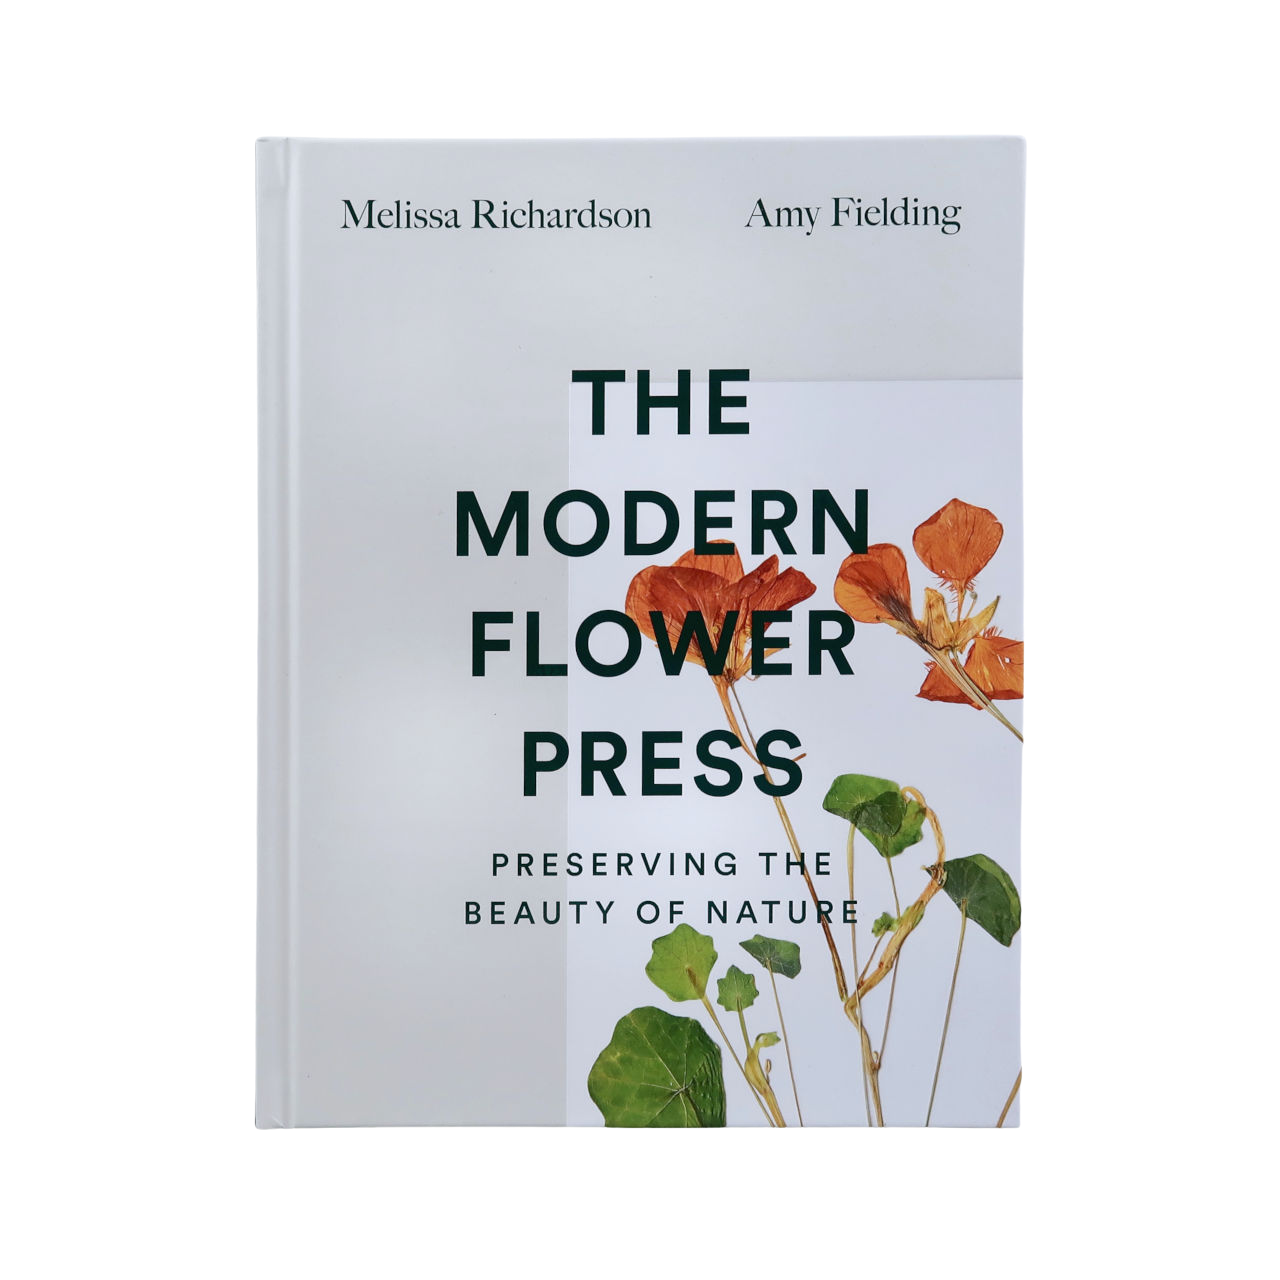 william-collins-the-modern-flower-press-melissa-richardson-and-amy-fielding